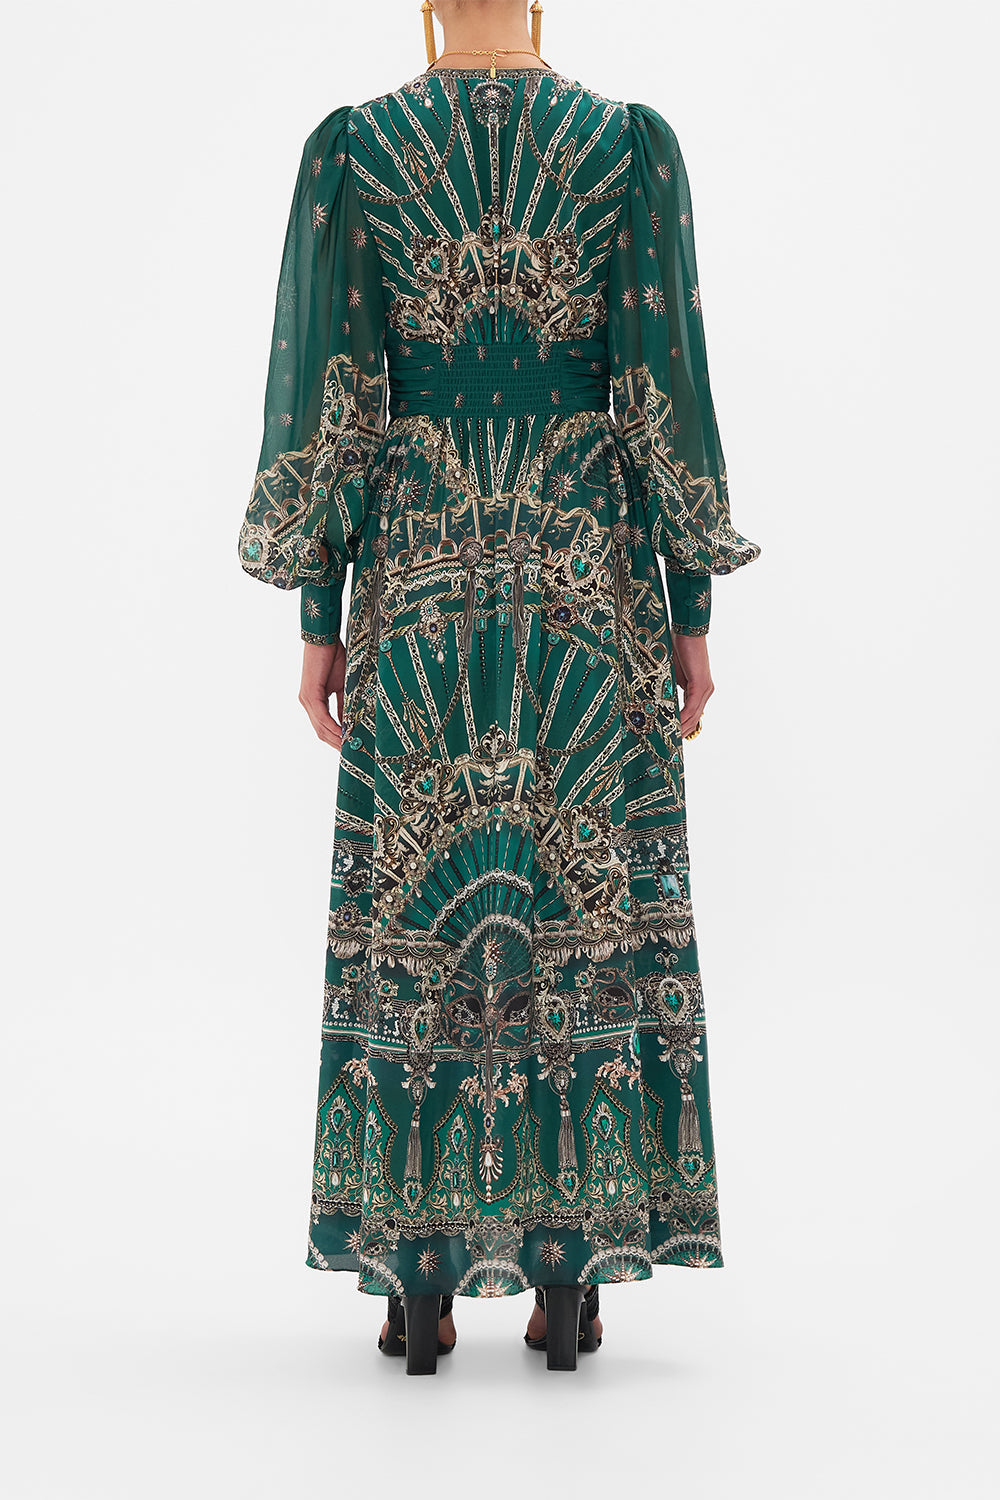 Back view of model wearing CAMILLA Long Silk Dress in A Venice Veil print